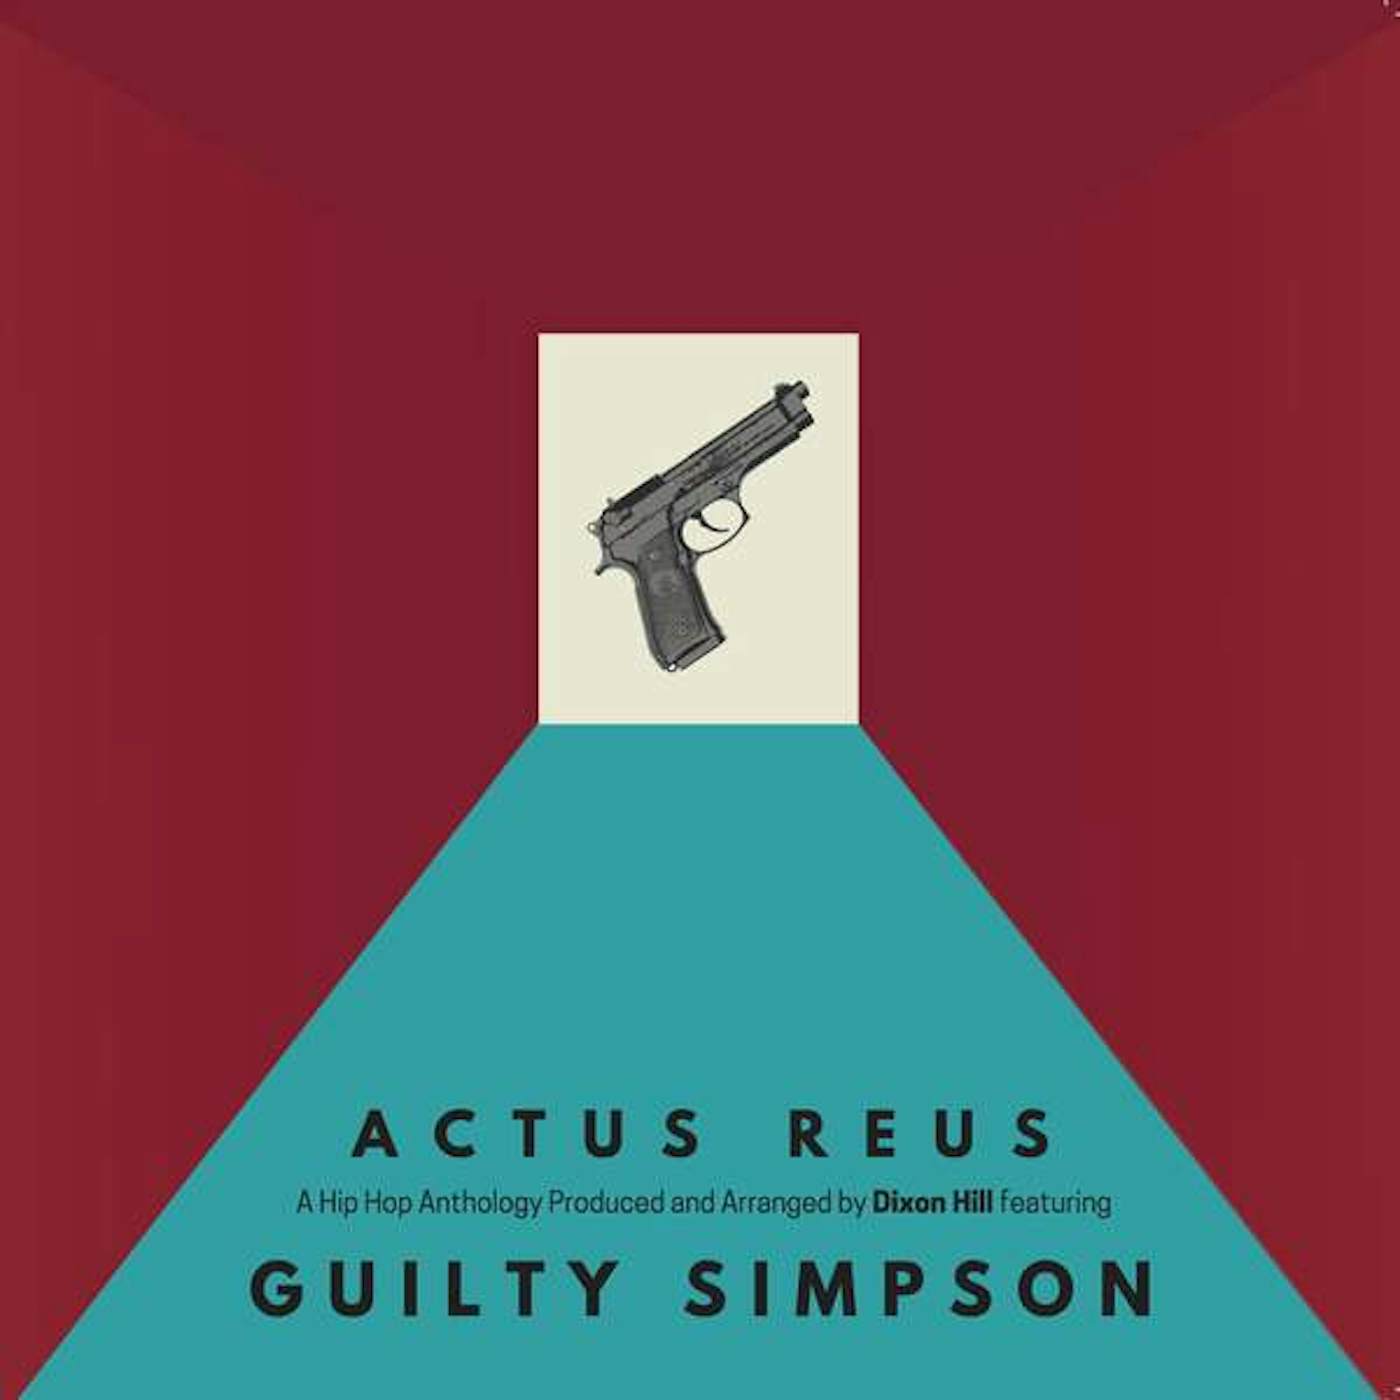 Guilty Simpson & Dixon Hill ACTUS REUS Vinyl Record